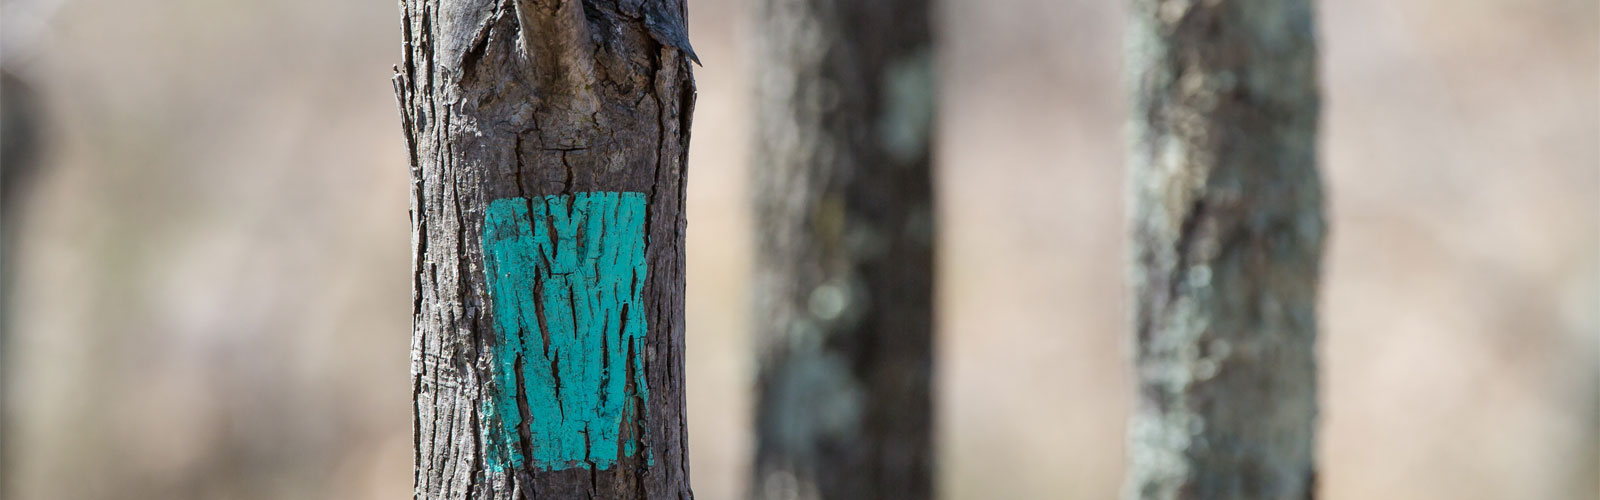 boundary marking paint on tree